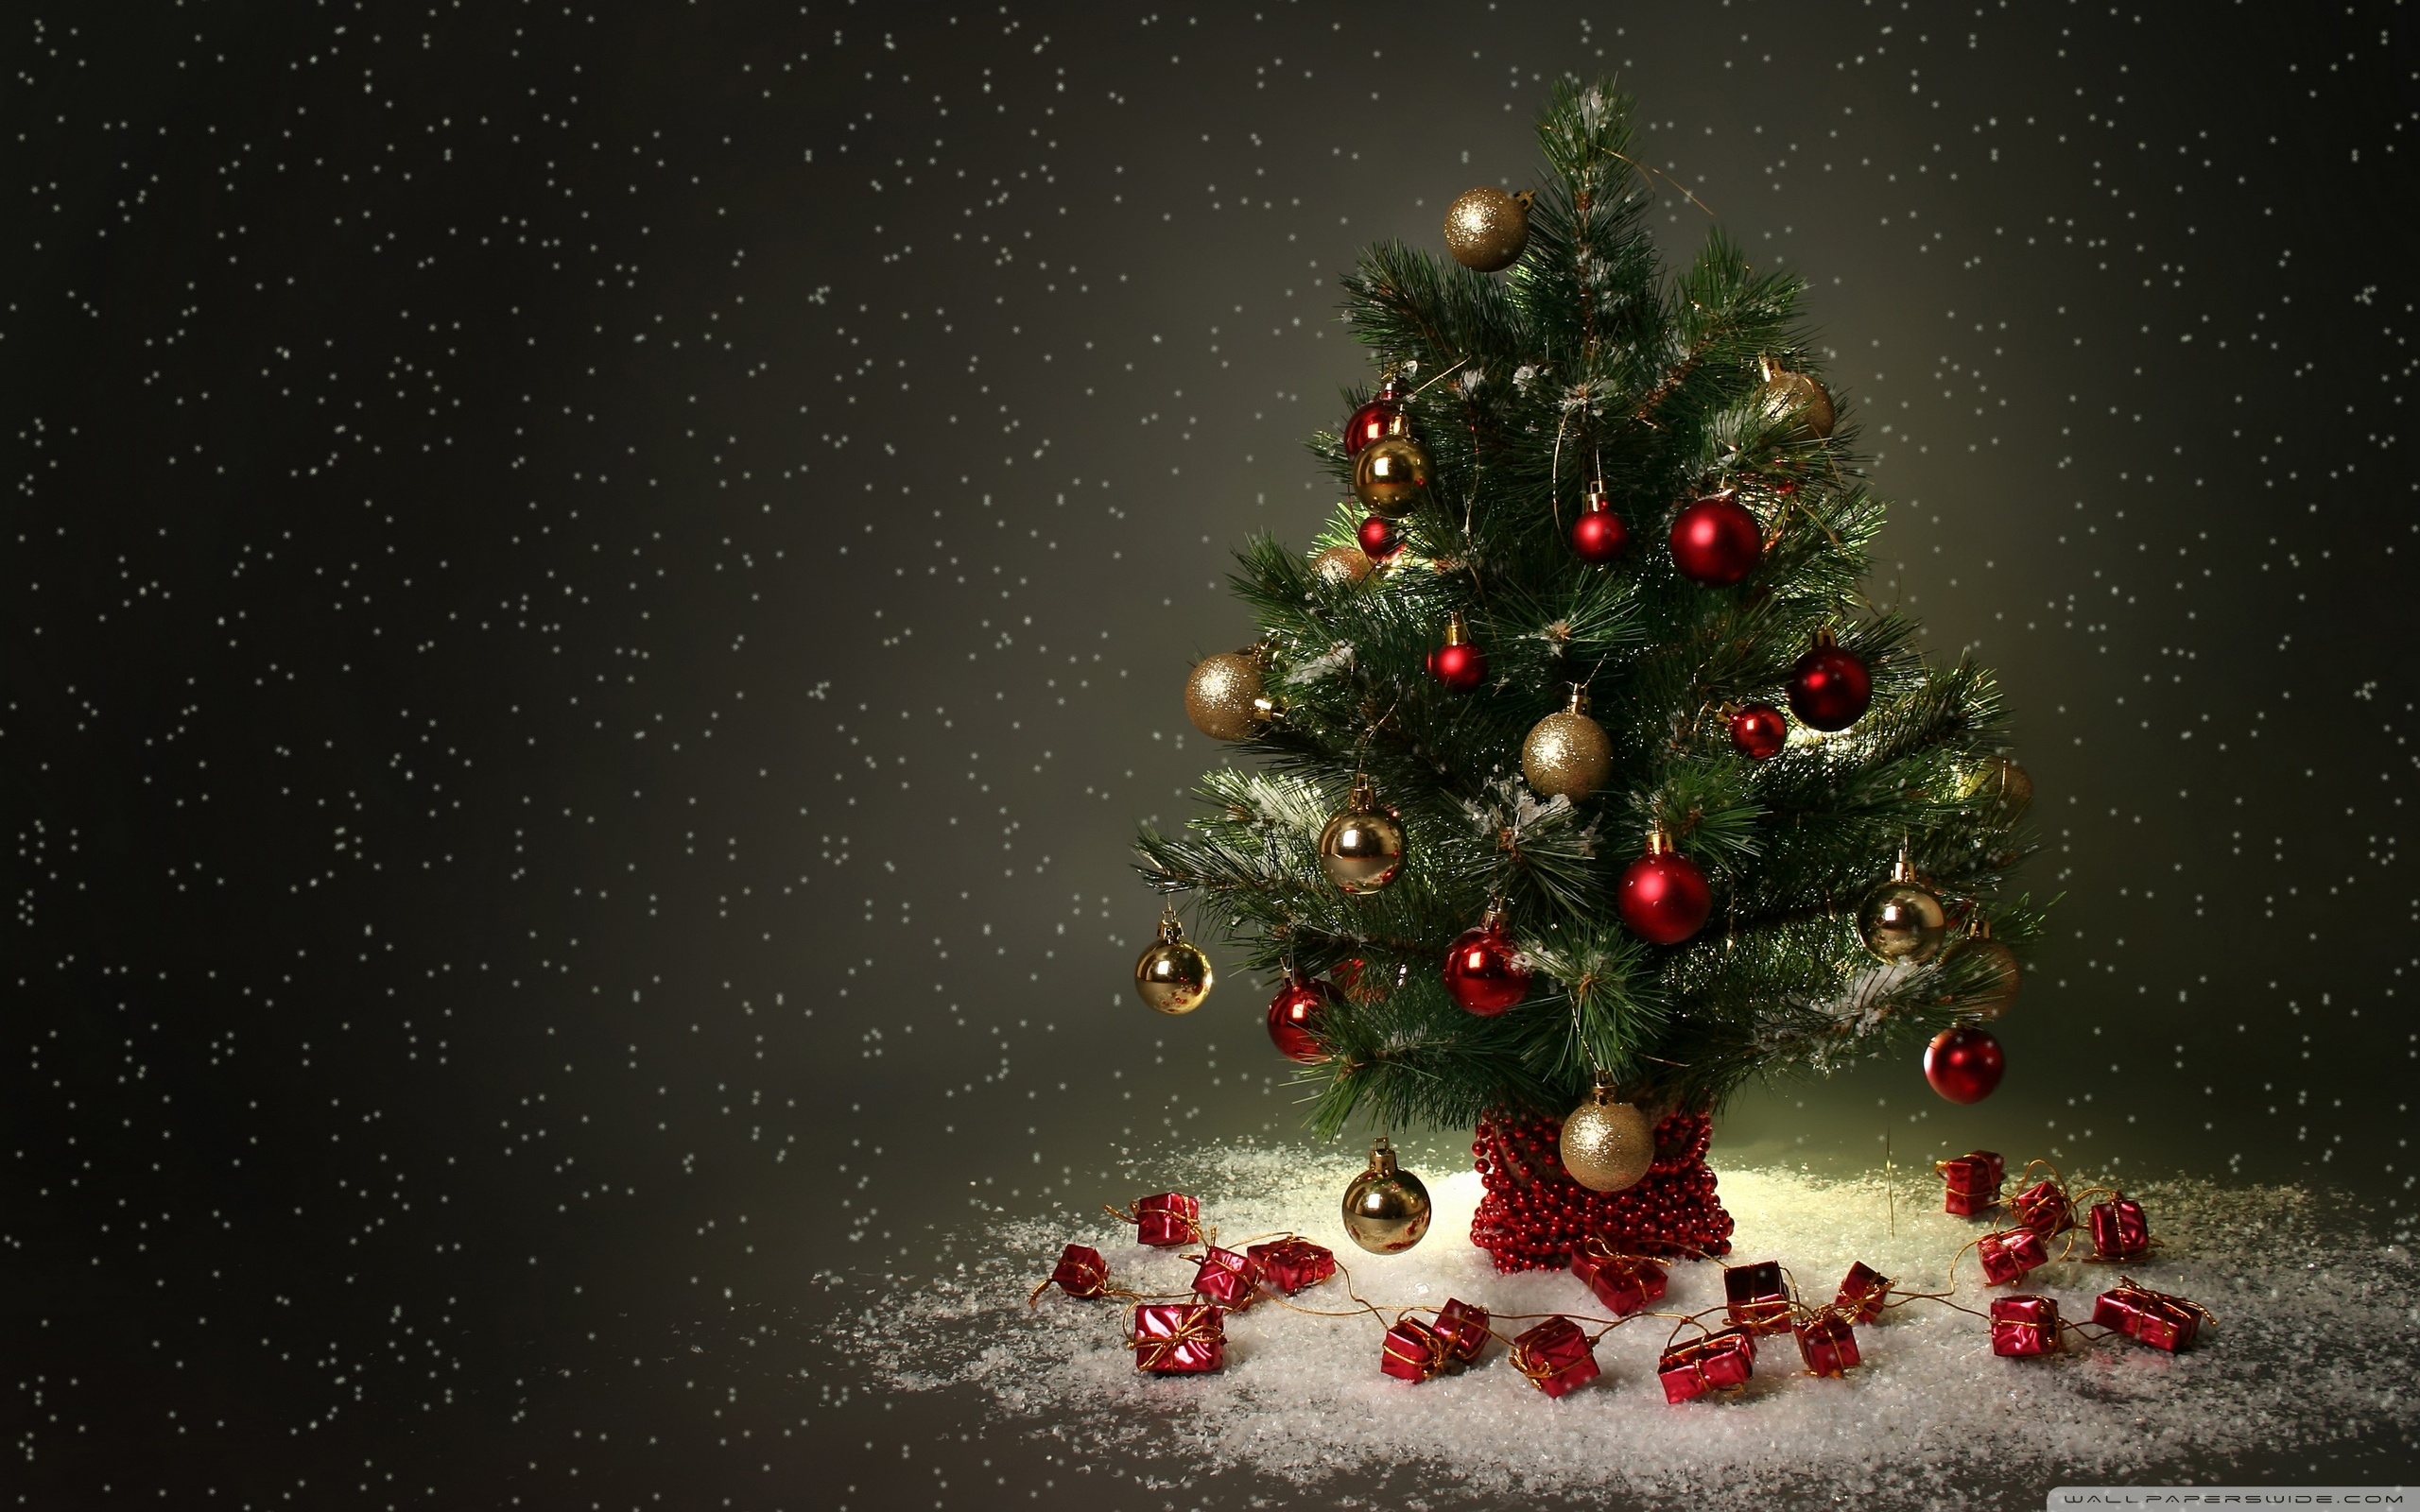 Small Christmas Tree Ultra HD Desktop Background Wallpaper for 4K UHD TV, Tablet